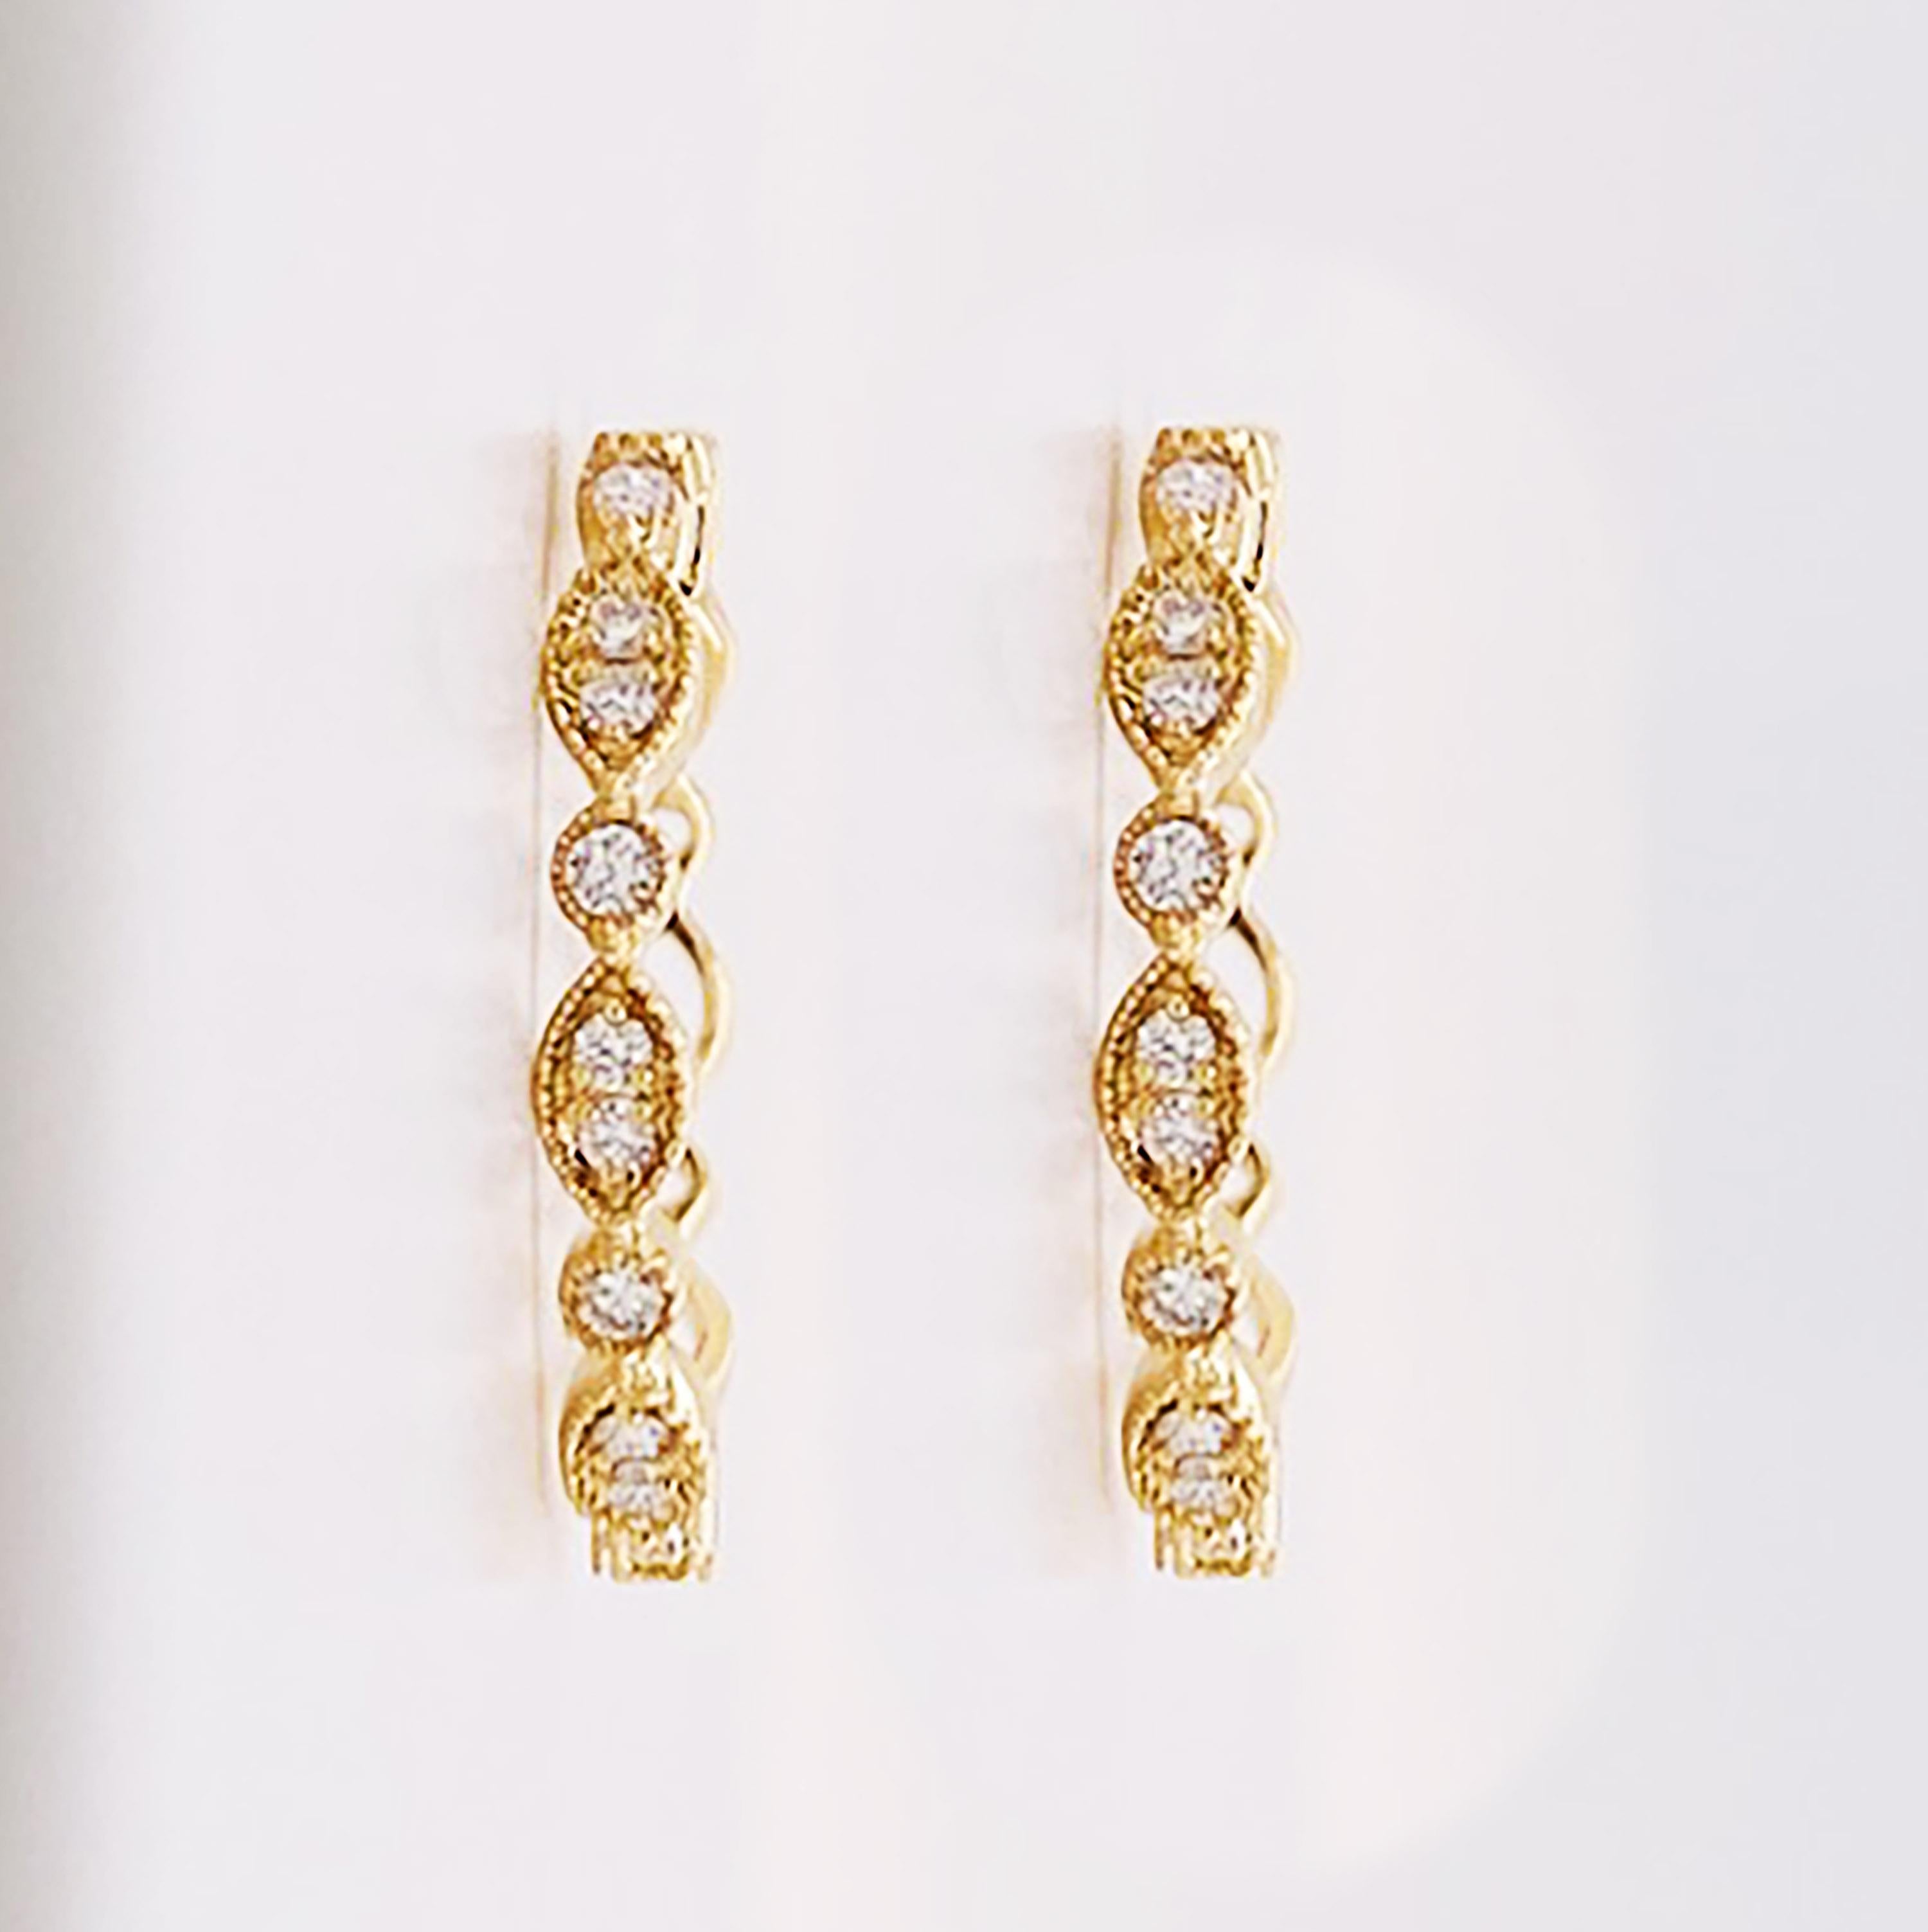 Round Cut Diamond Huggie Earrings 14K Gold .16 Carat Diamond Medium Hoops Milgrain For Sale